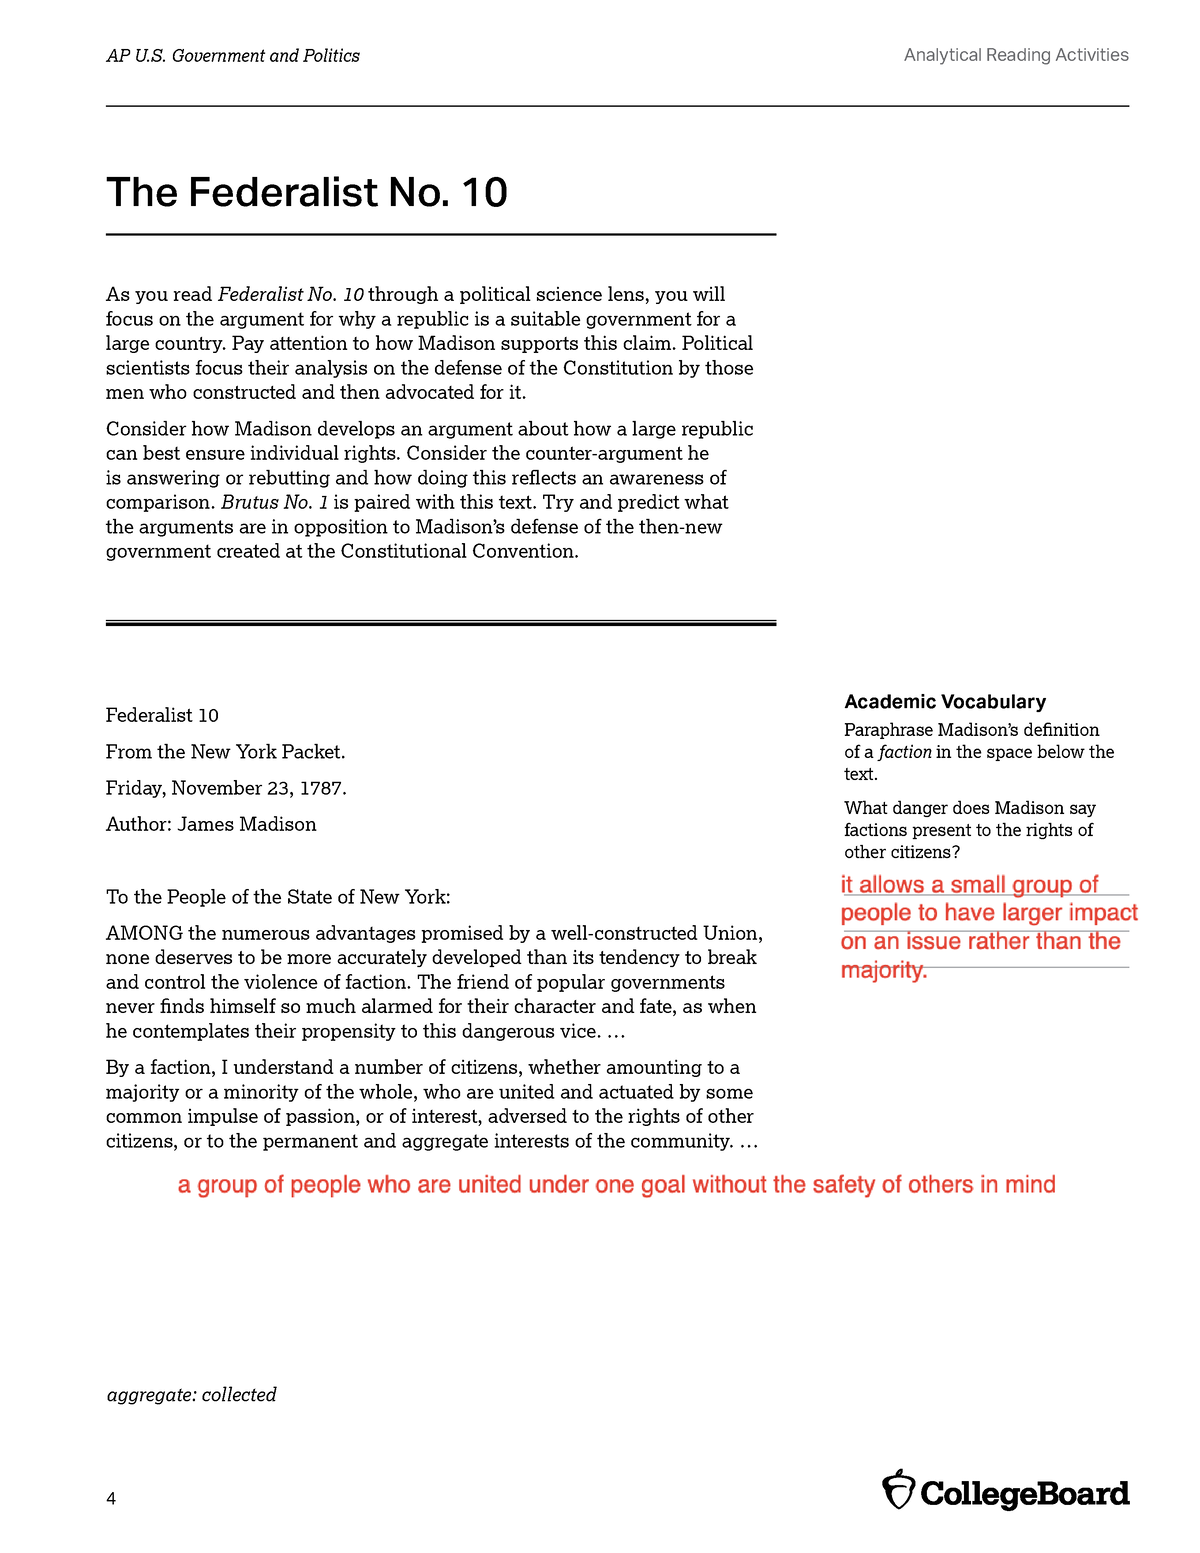 federalist paper 10 purpose